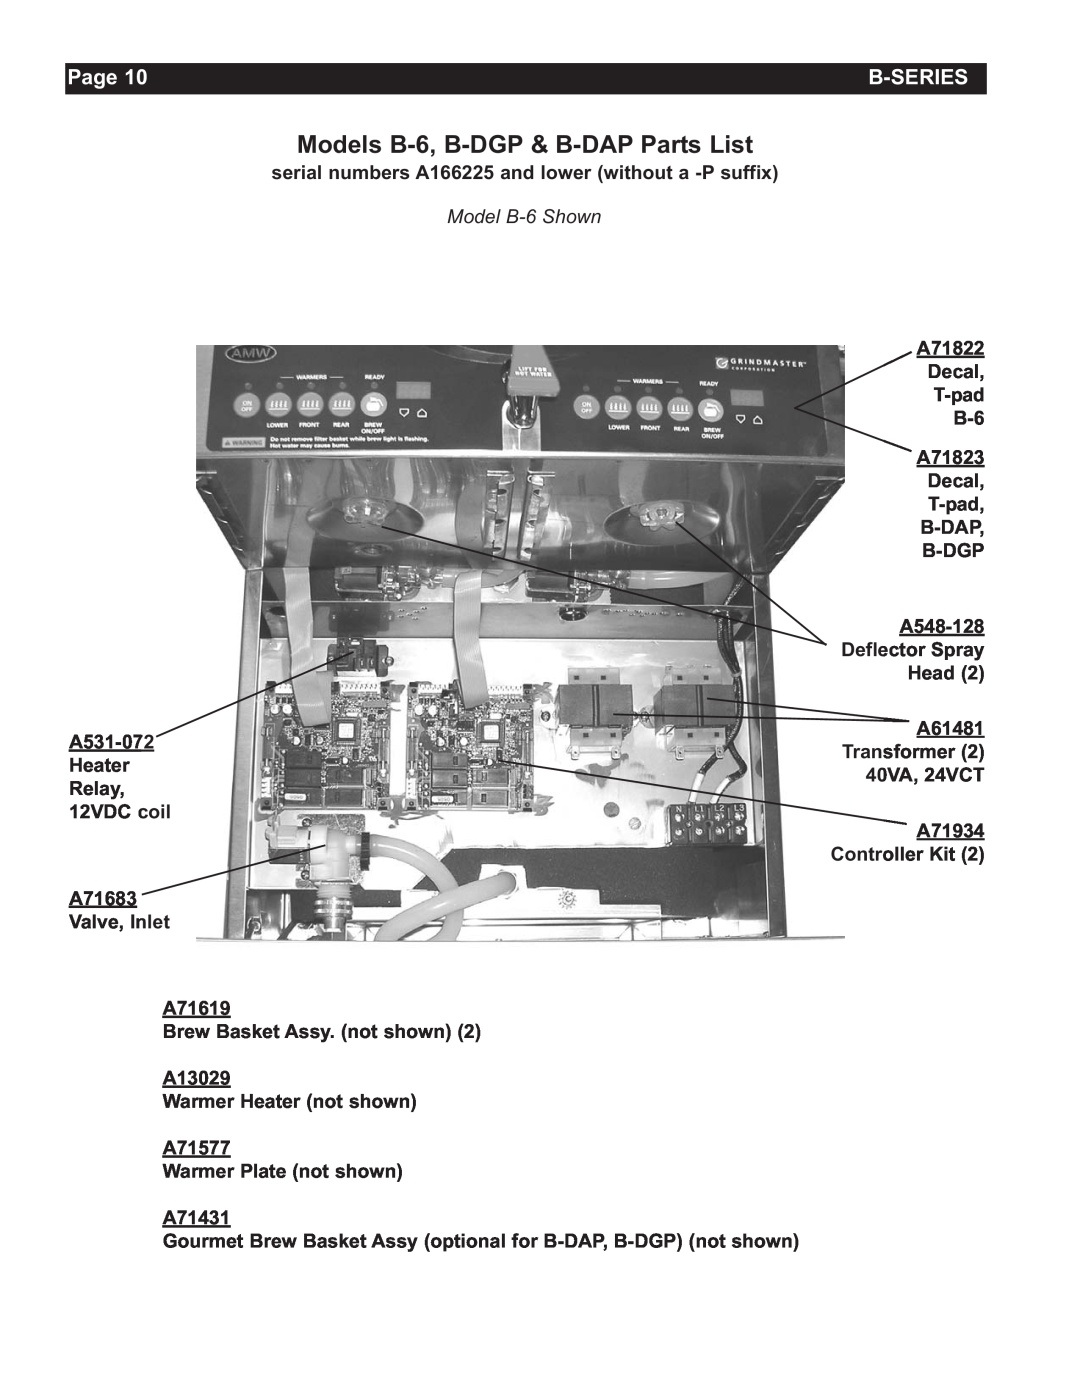 Grindmaster AMW B-Series manual Models B-6, B-DGP & B-DAP Parts List, Model B-6 Shown, Page 